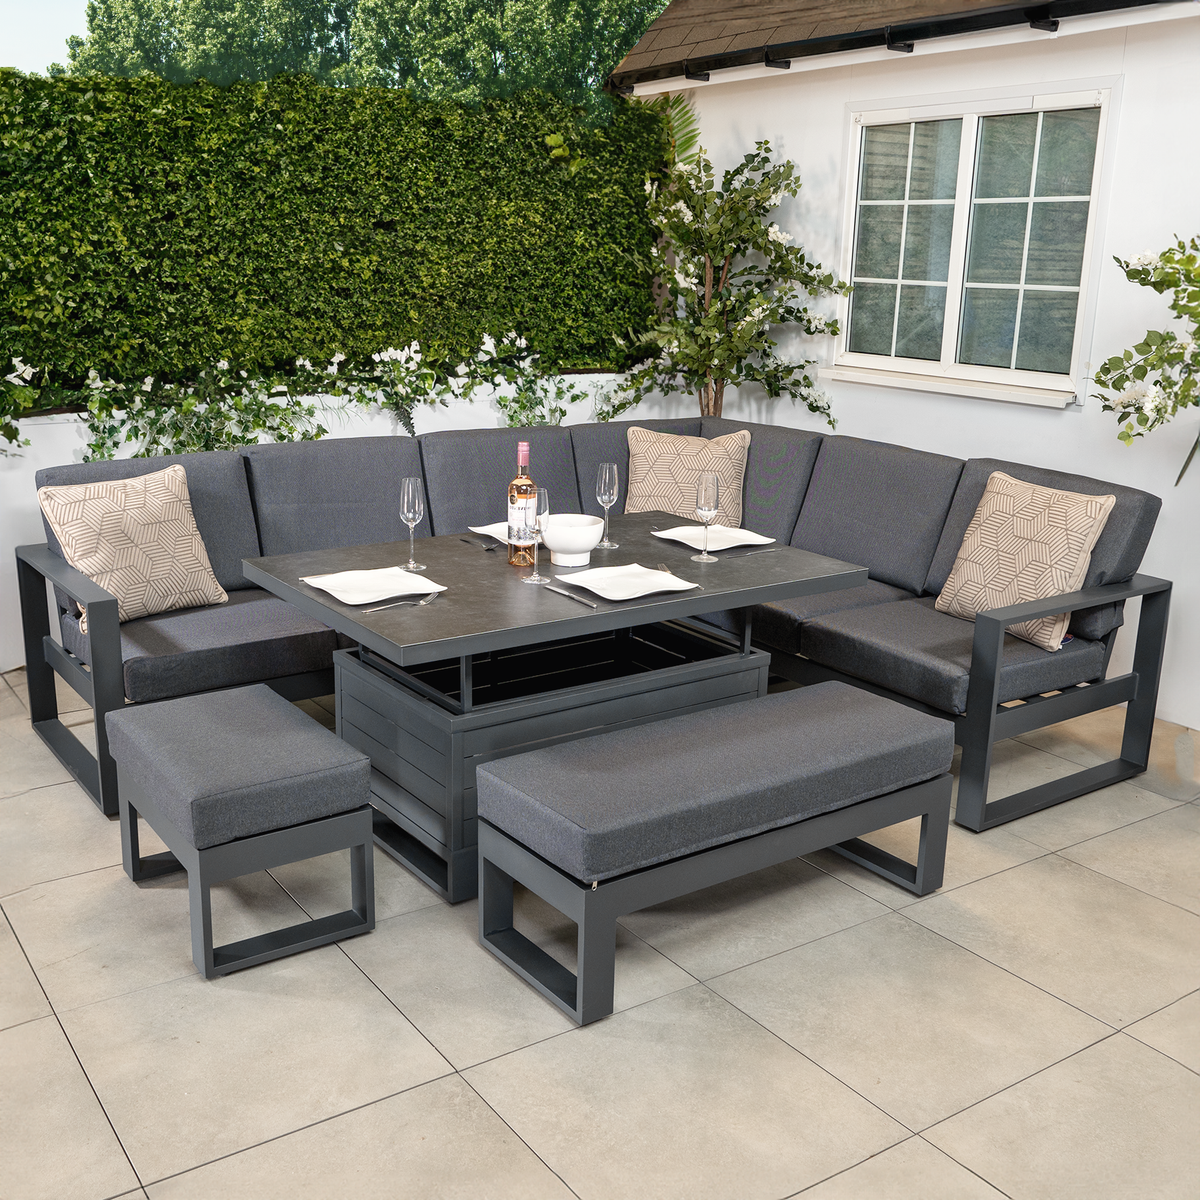 Bracken Outdoors Portland Aluminium Corner Garden Furniture Set with Adjustable Table